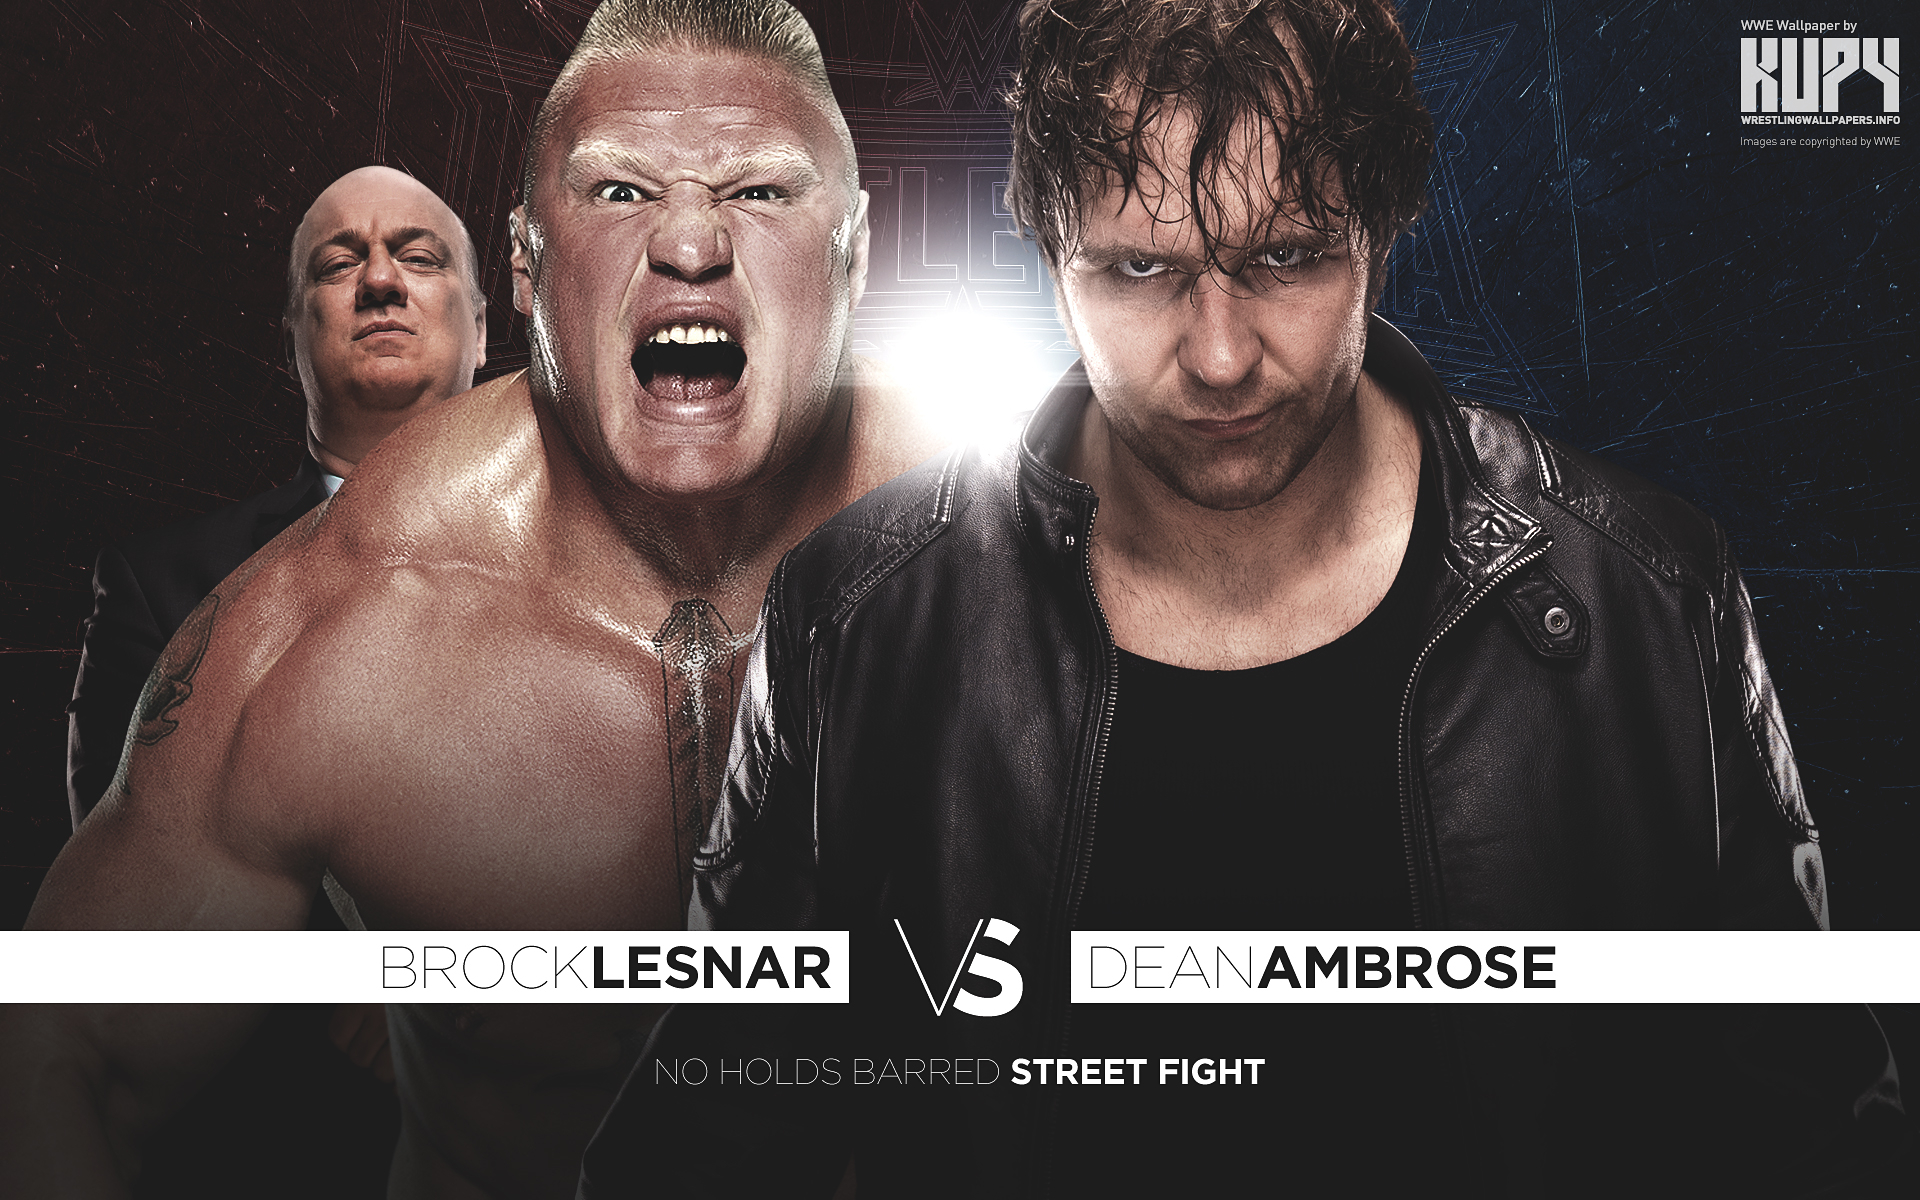 1920x1200 NEW WrestleMania 32: Brock Lesnar vs. Dean Ambrose wallpaper! Kupy Wrestling Wallpapers